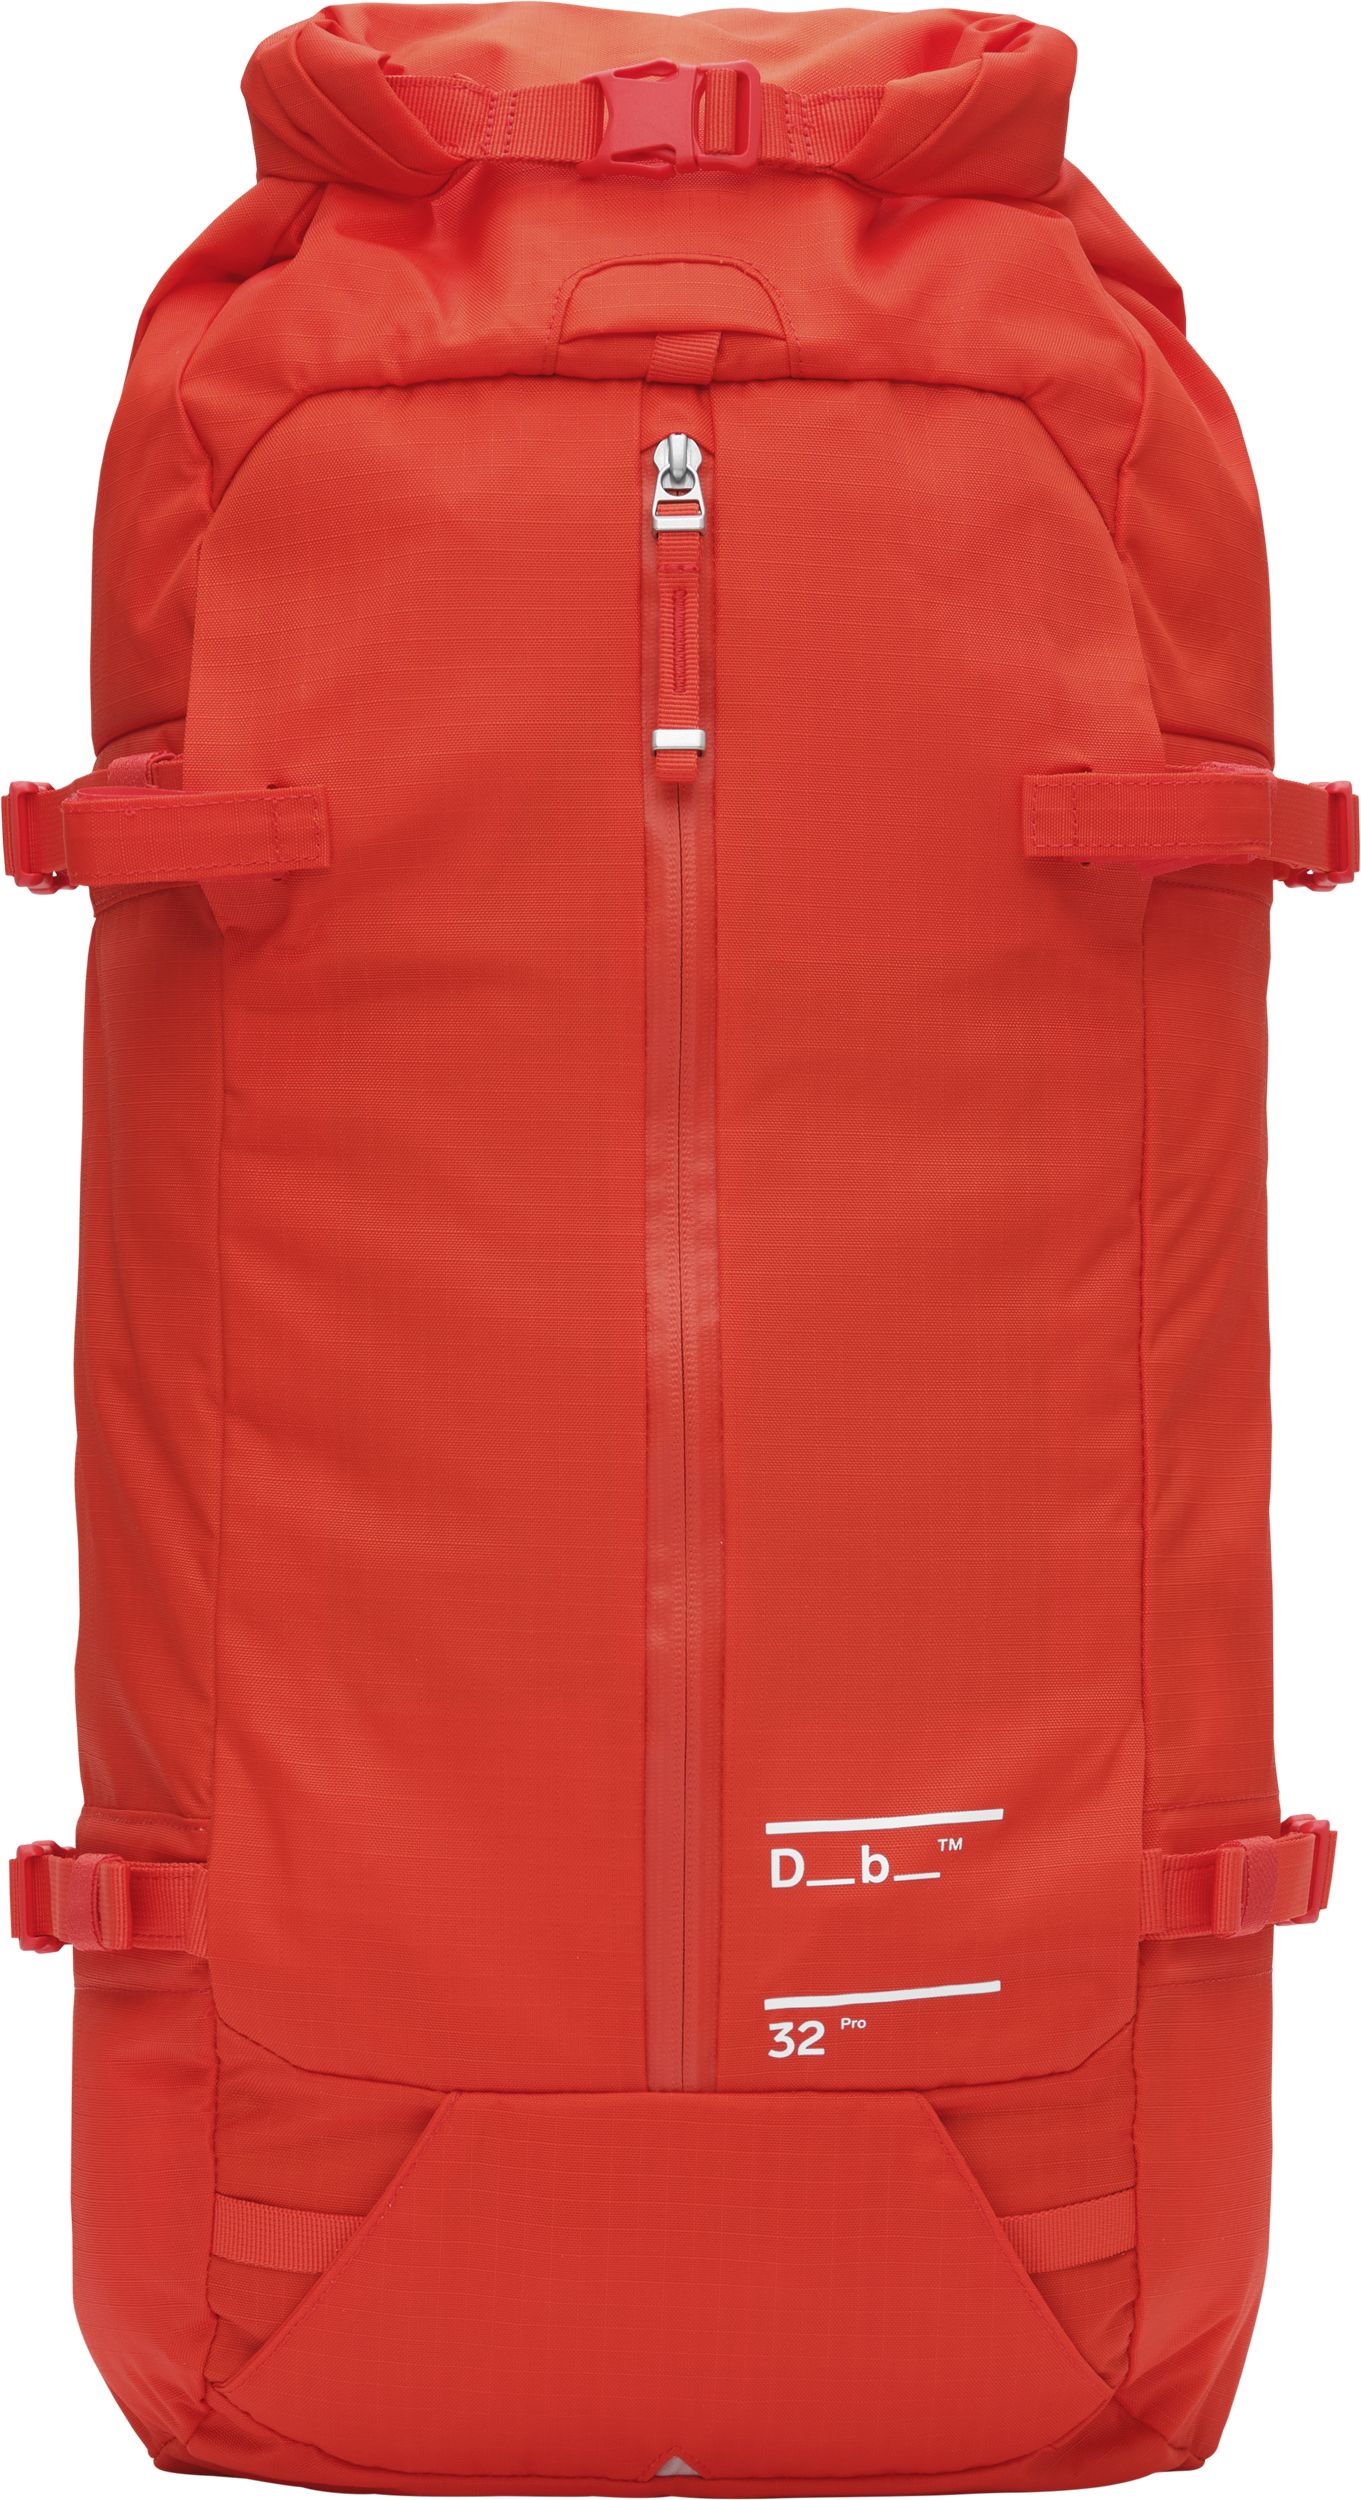 DB, Snow Pro Backpack 32L